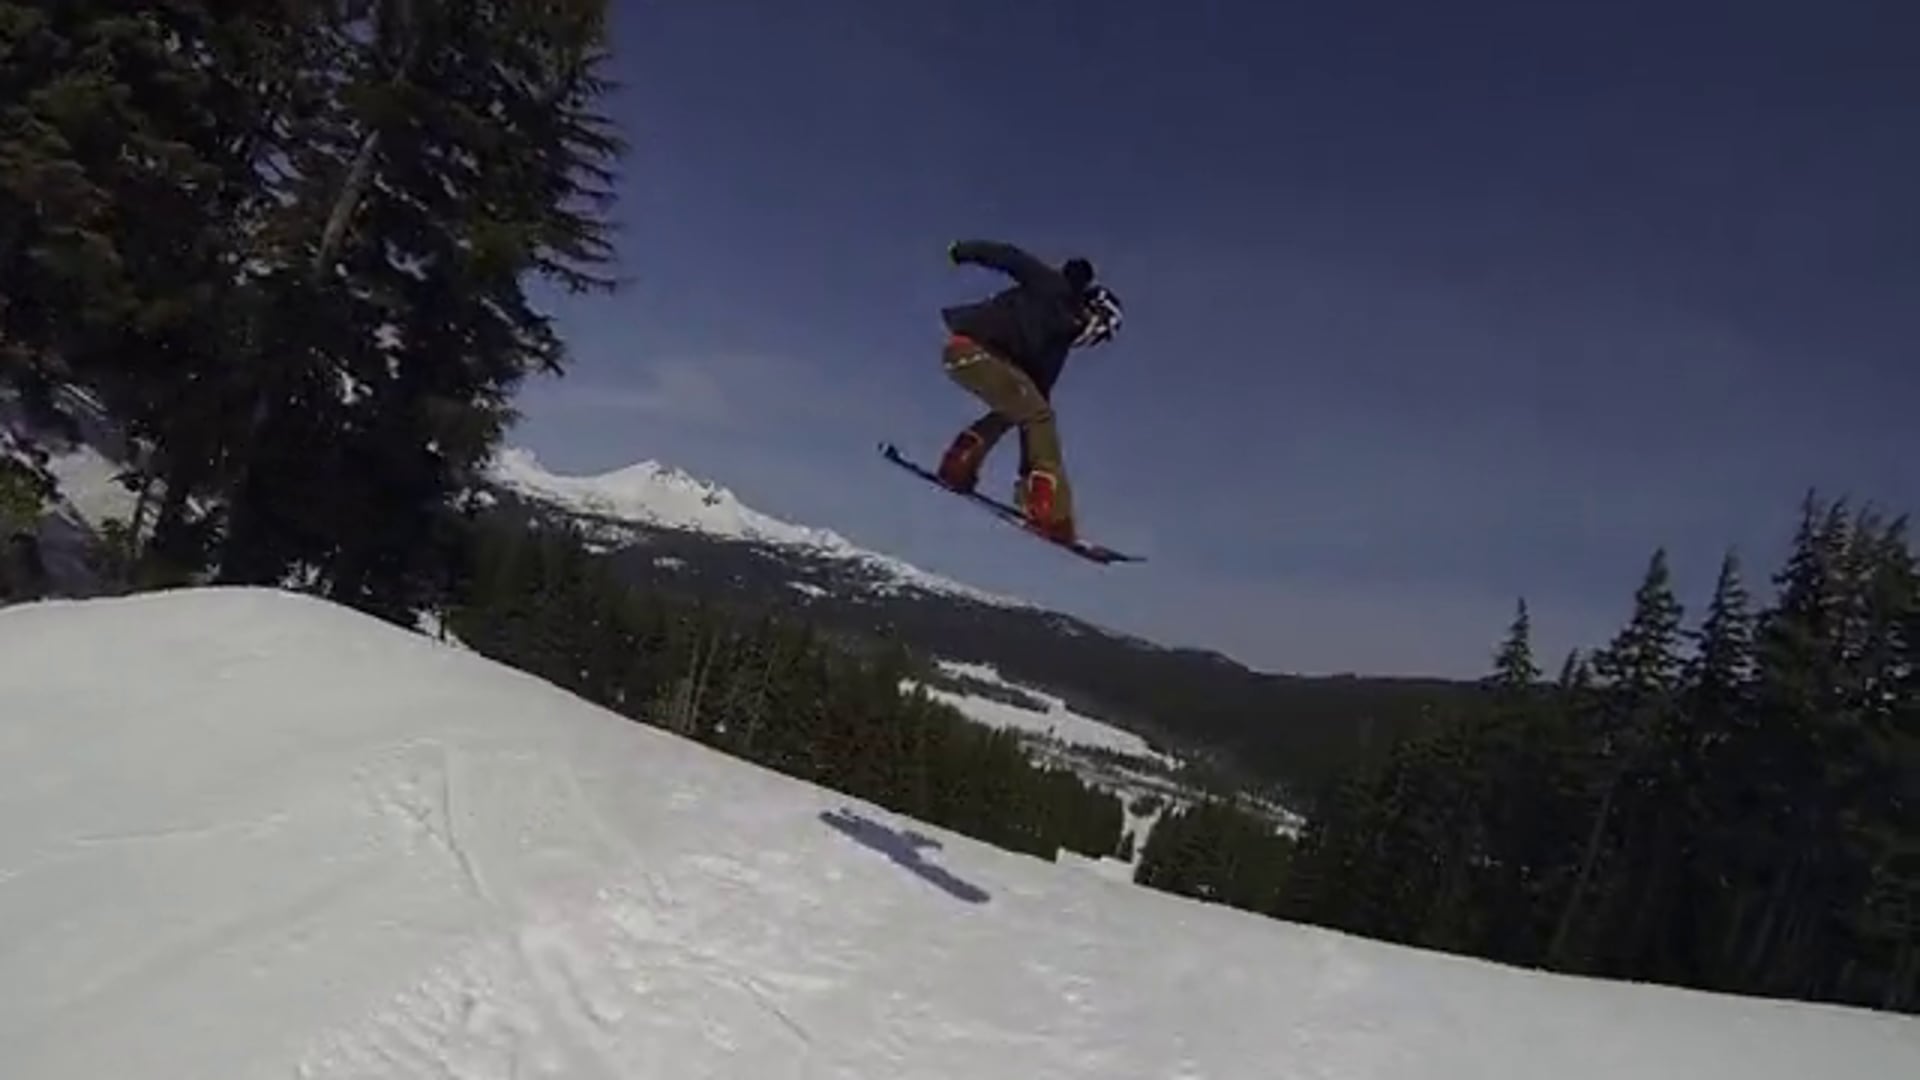 Mikeys Snowboard Edit